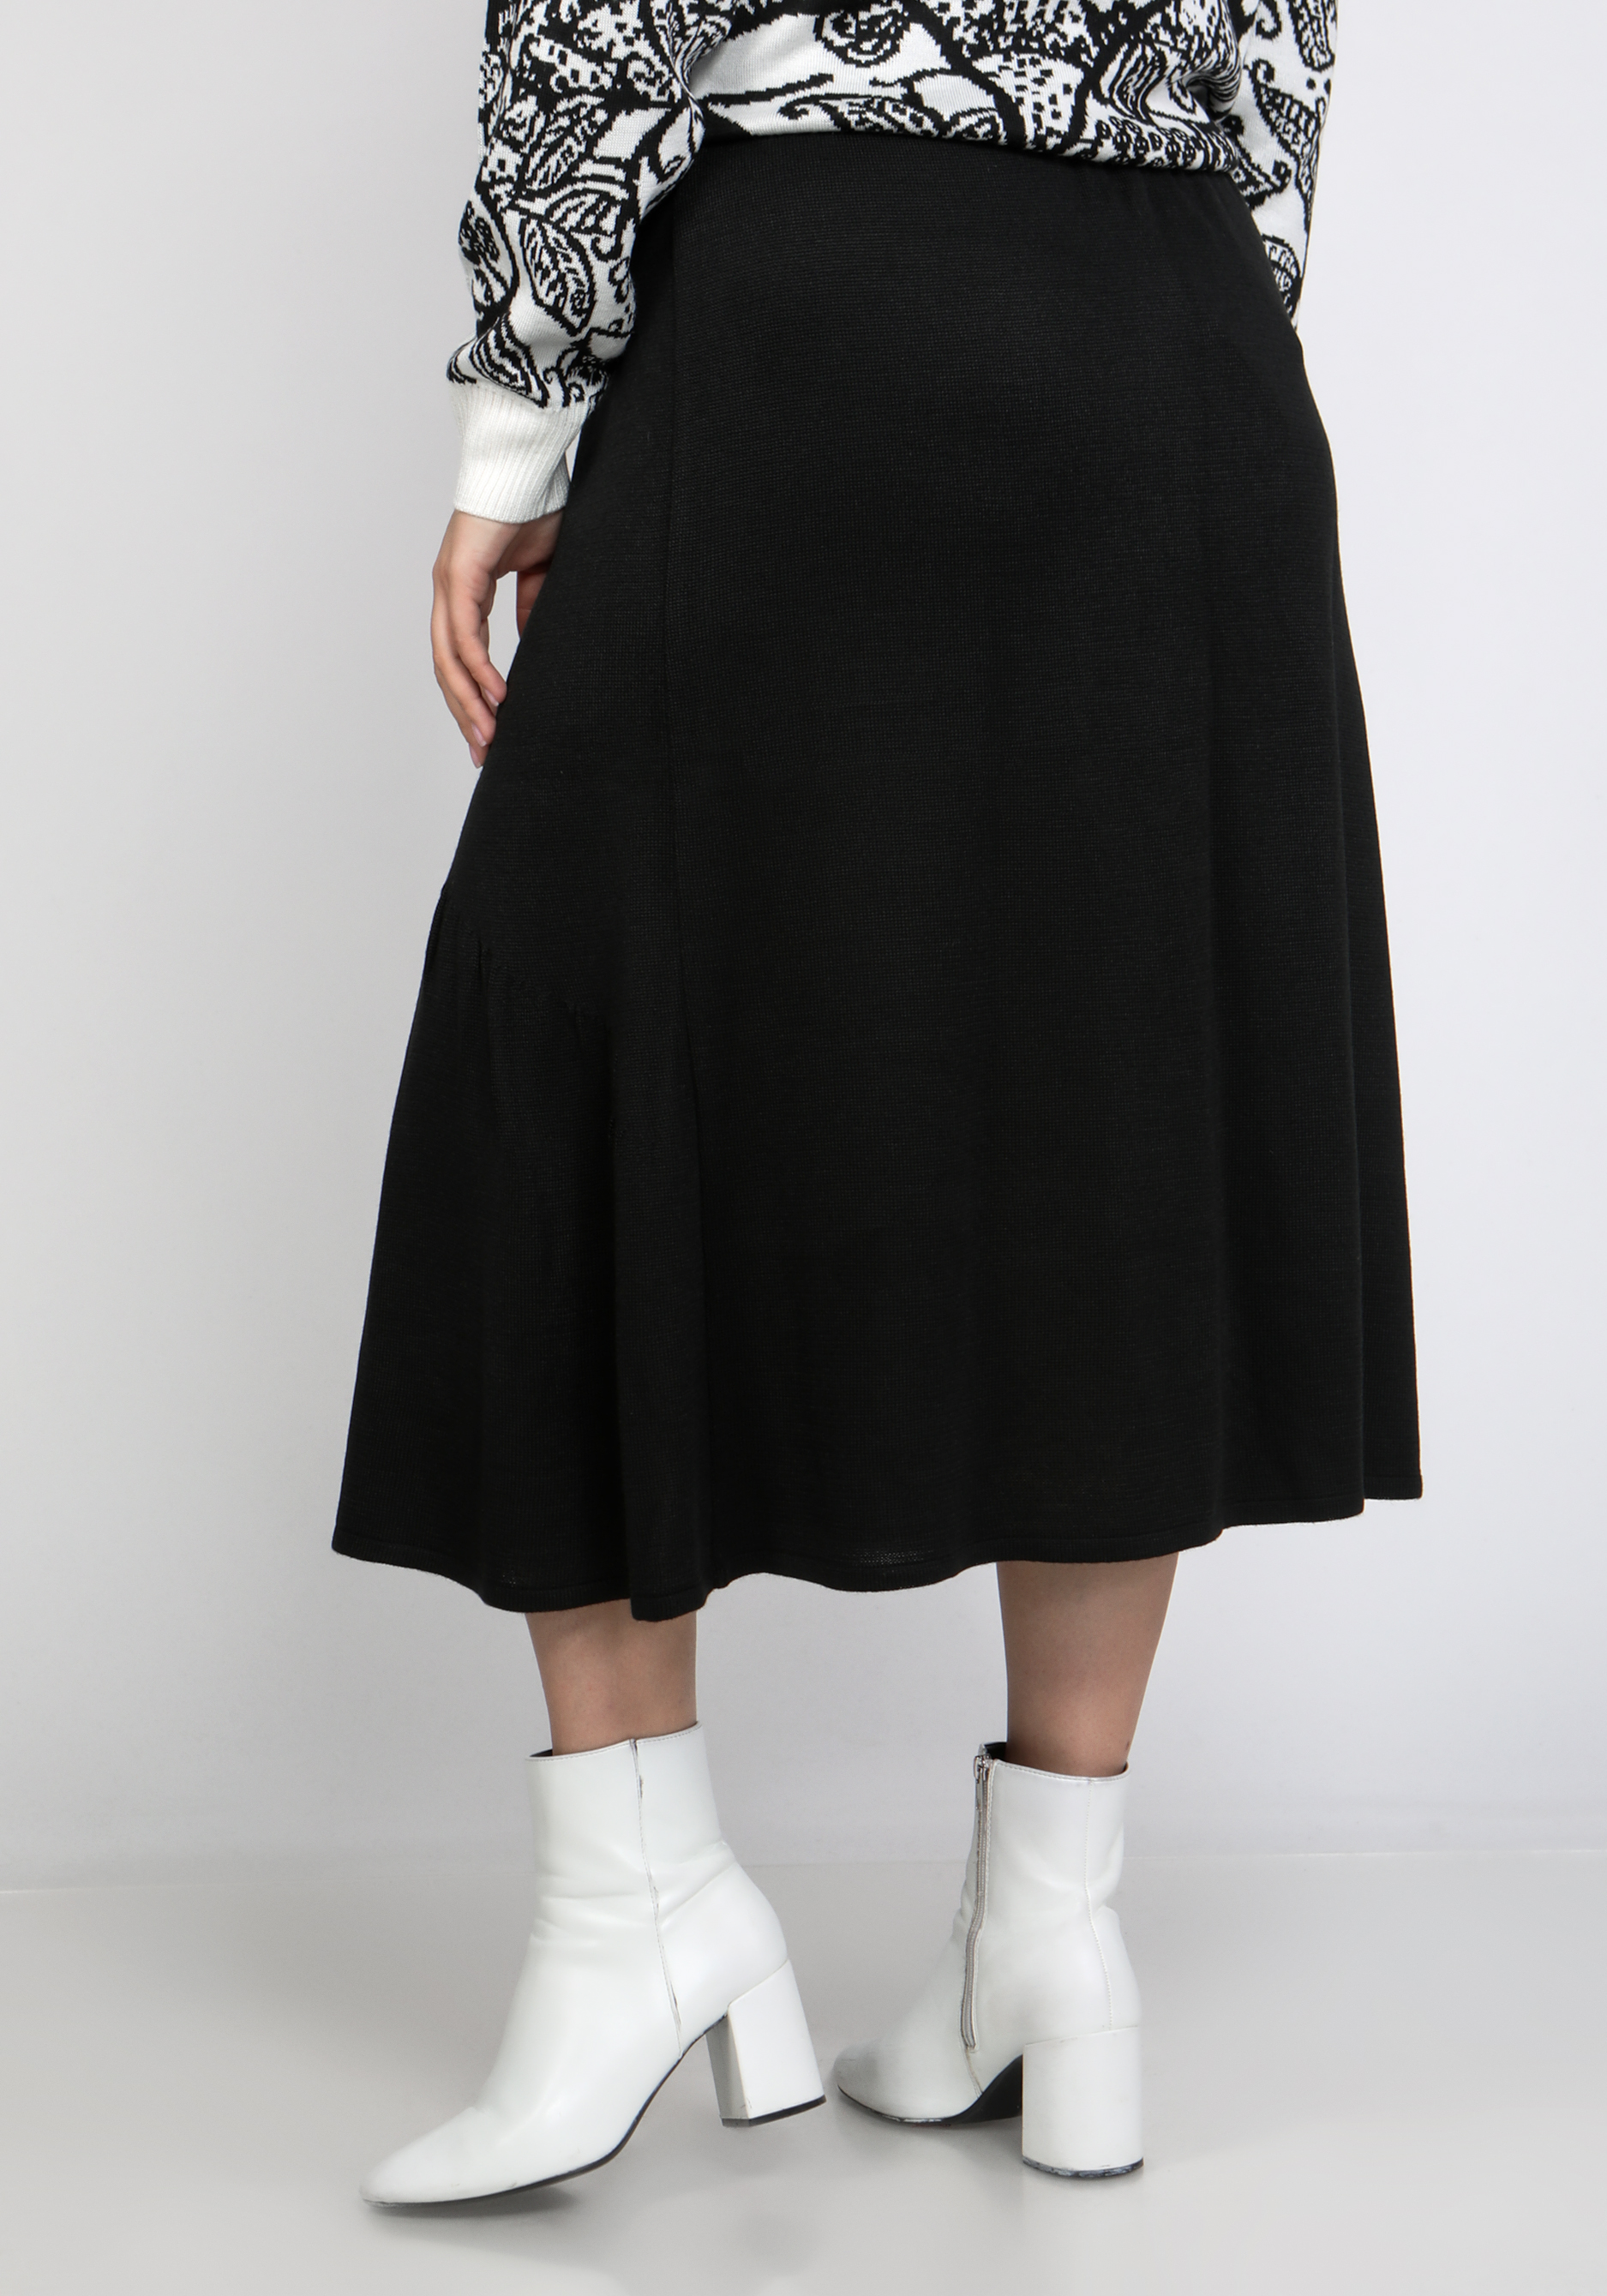 Юбка с воланом Vivawool, размер 48, цвет темно-серый - фото 4